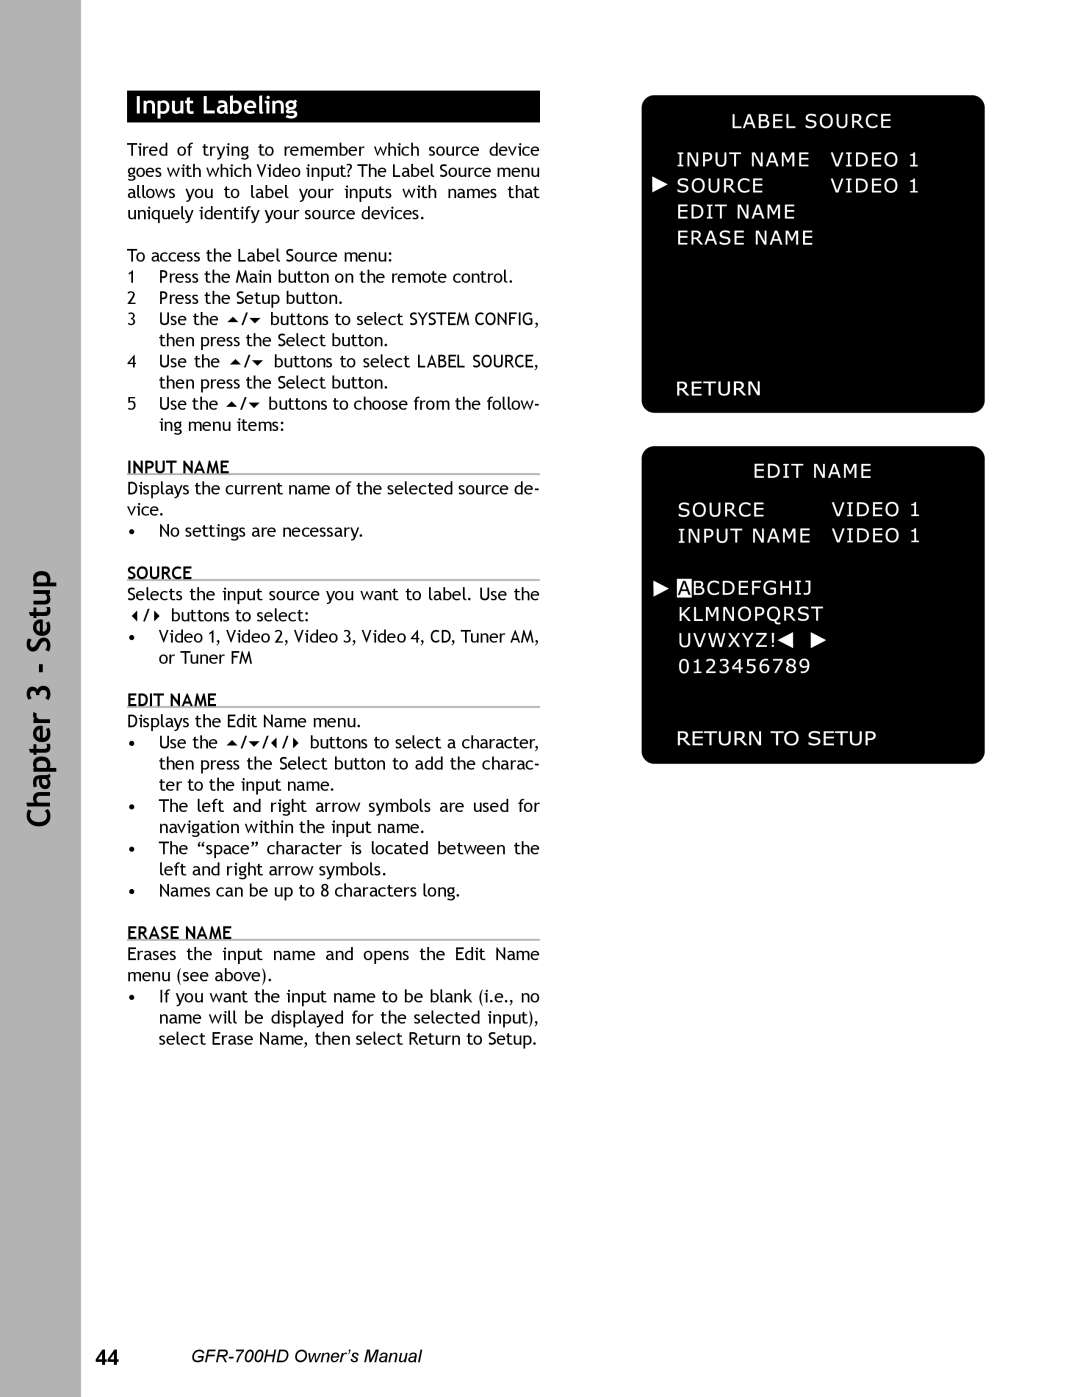 Adcom GFR-700HD user manual Input Labeling, Input Name, Edit Name, Erase Name, Setup, Source 